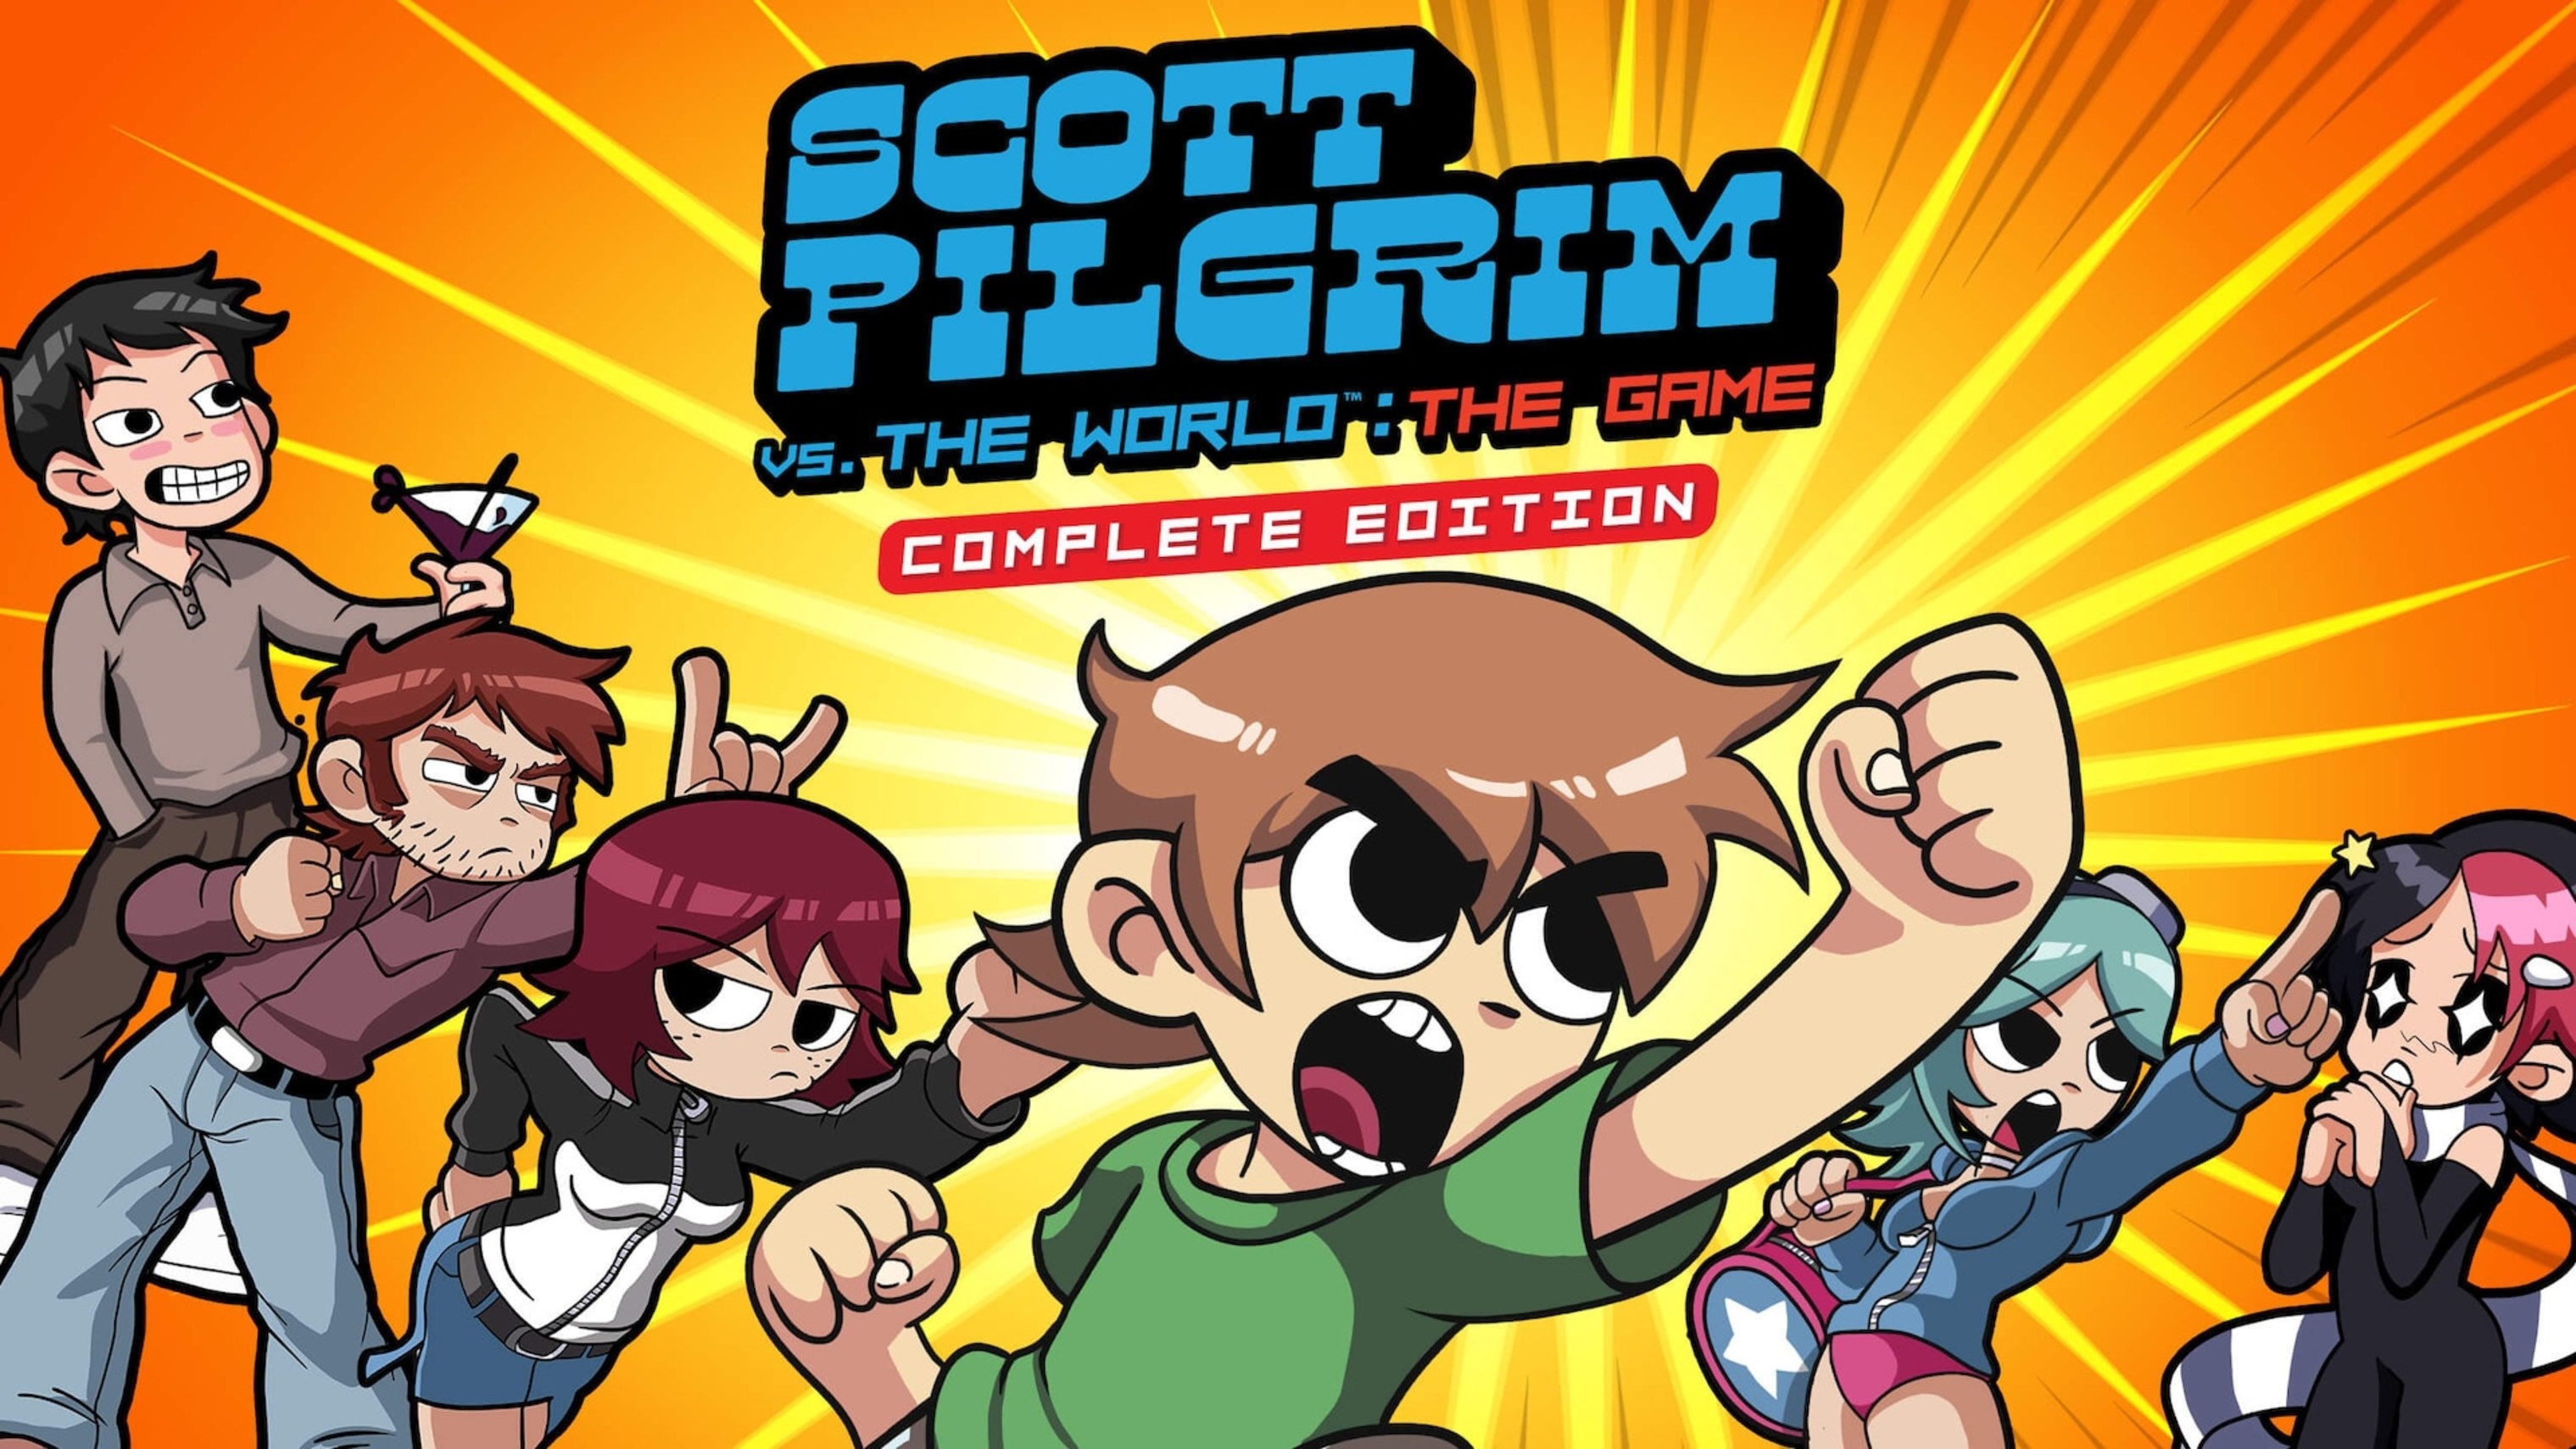 Ubisoft reveals Scott Pilgrim vs. The World: The Game - Complete Edition